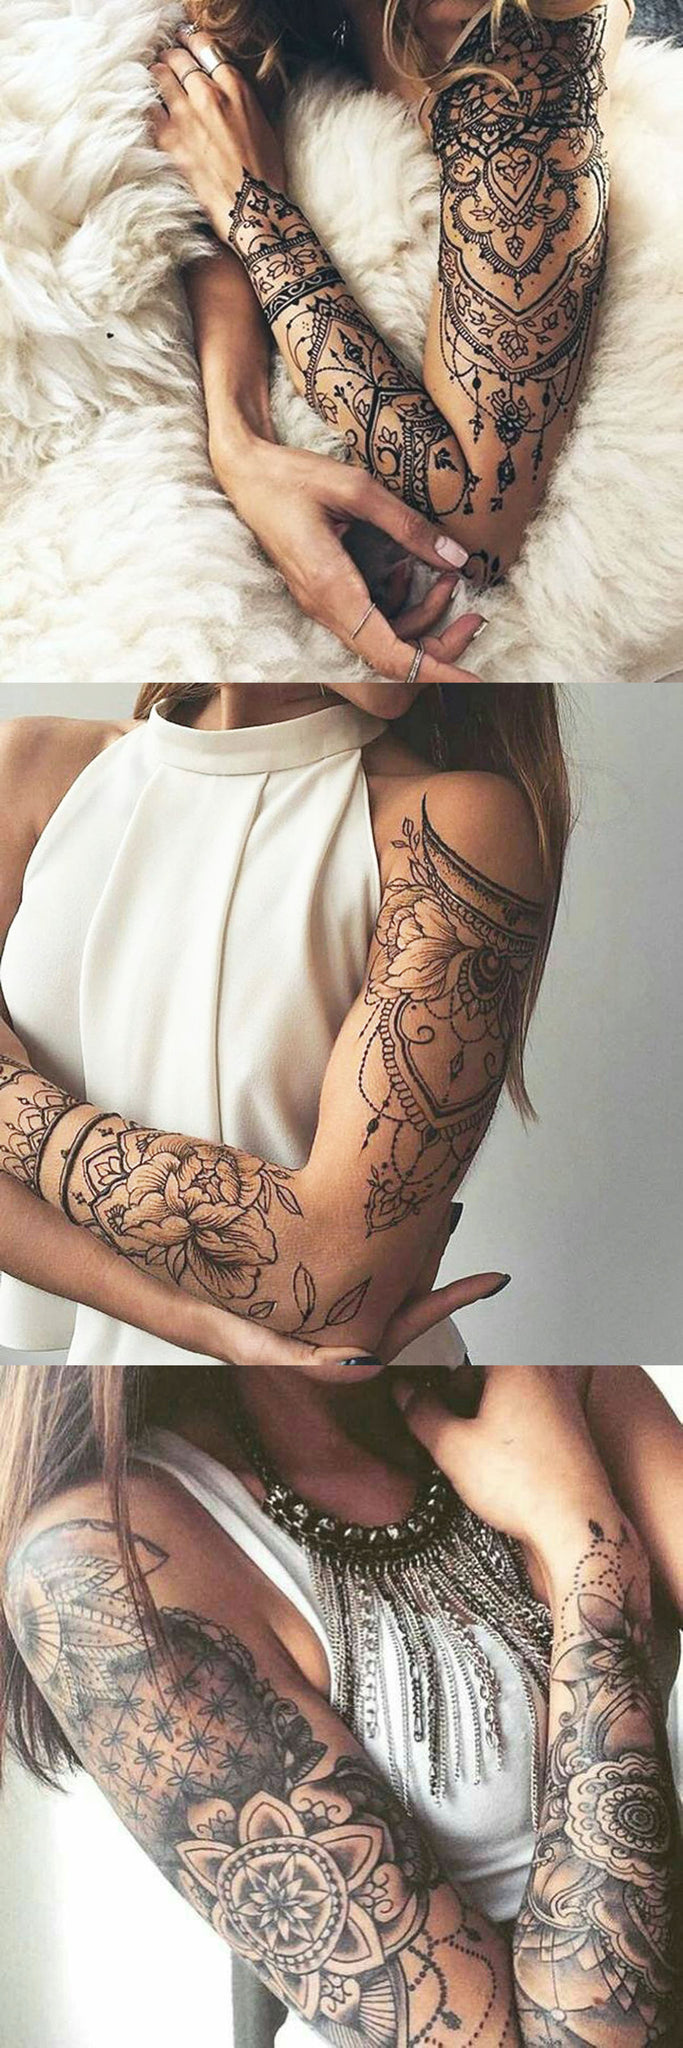 Lotus Arm Sleeve Tattoo Ideas for Women at MyBodiArt.com - Tribal Mandala Arm Bicep Tatt 